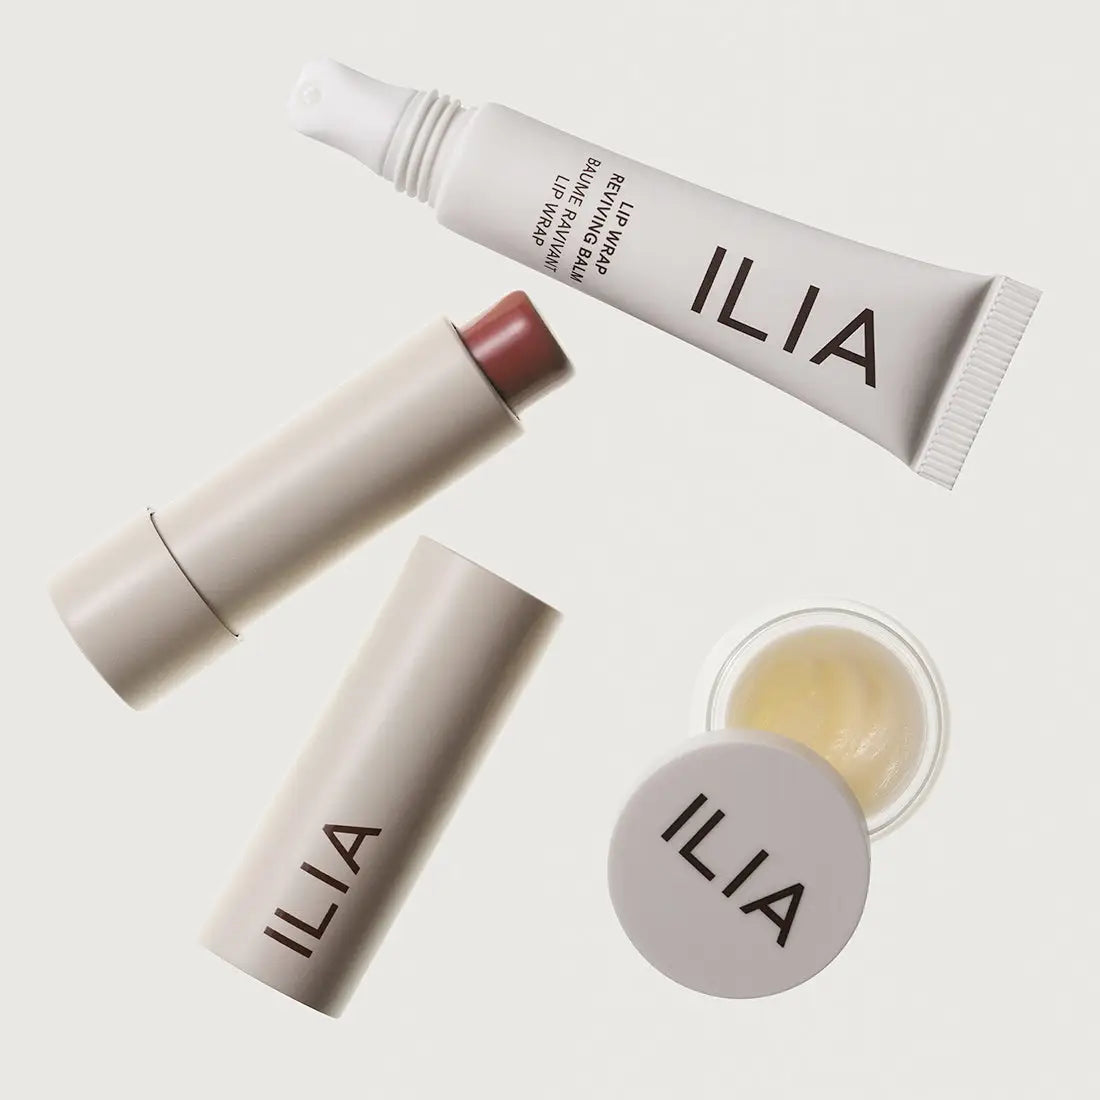 Ilia Beauty Holiday Lip set